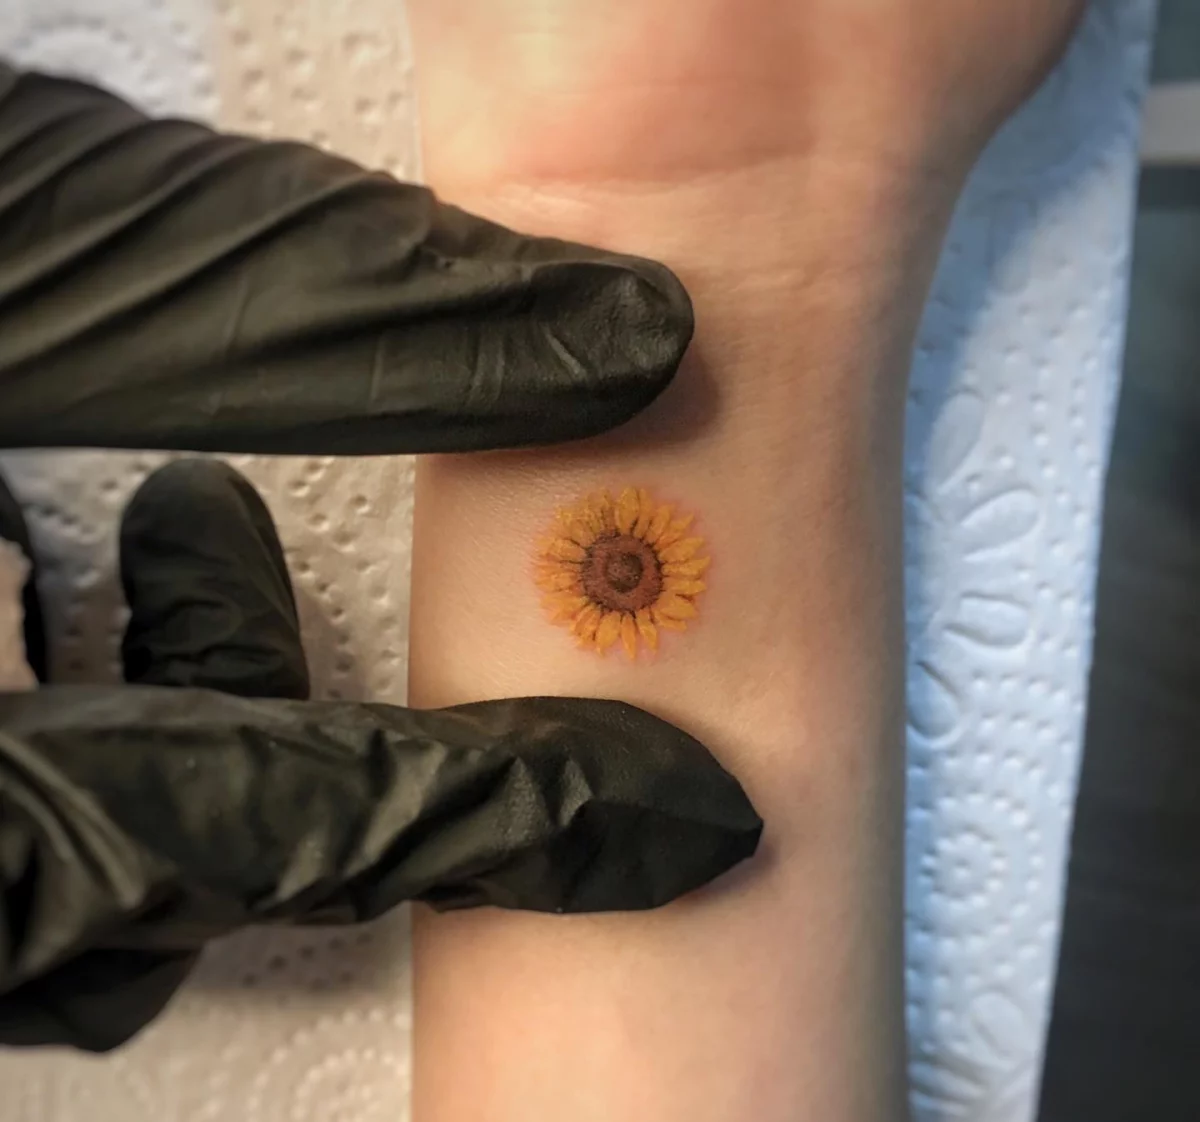 tiny sunflower tattoo